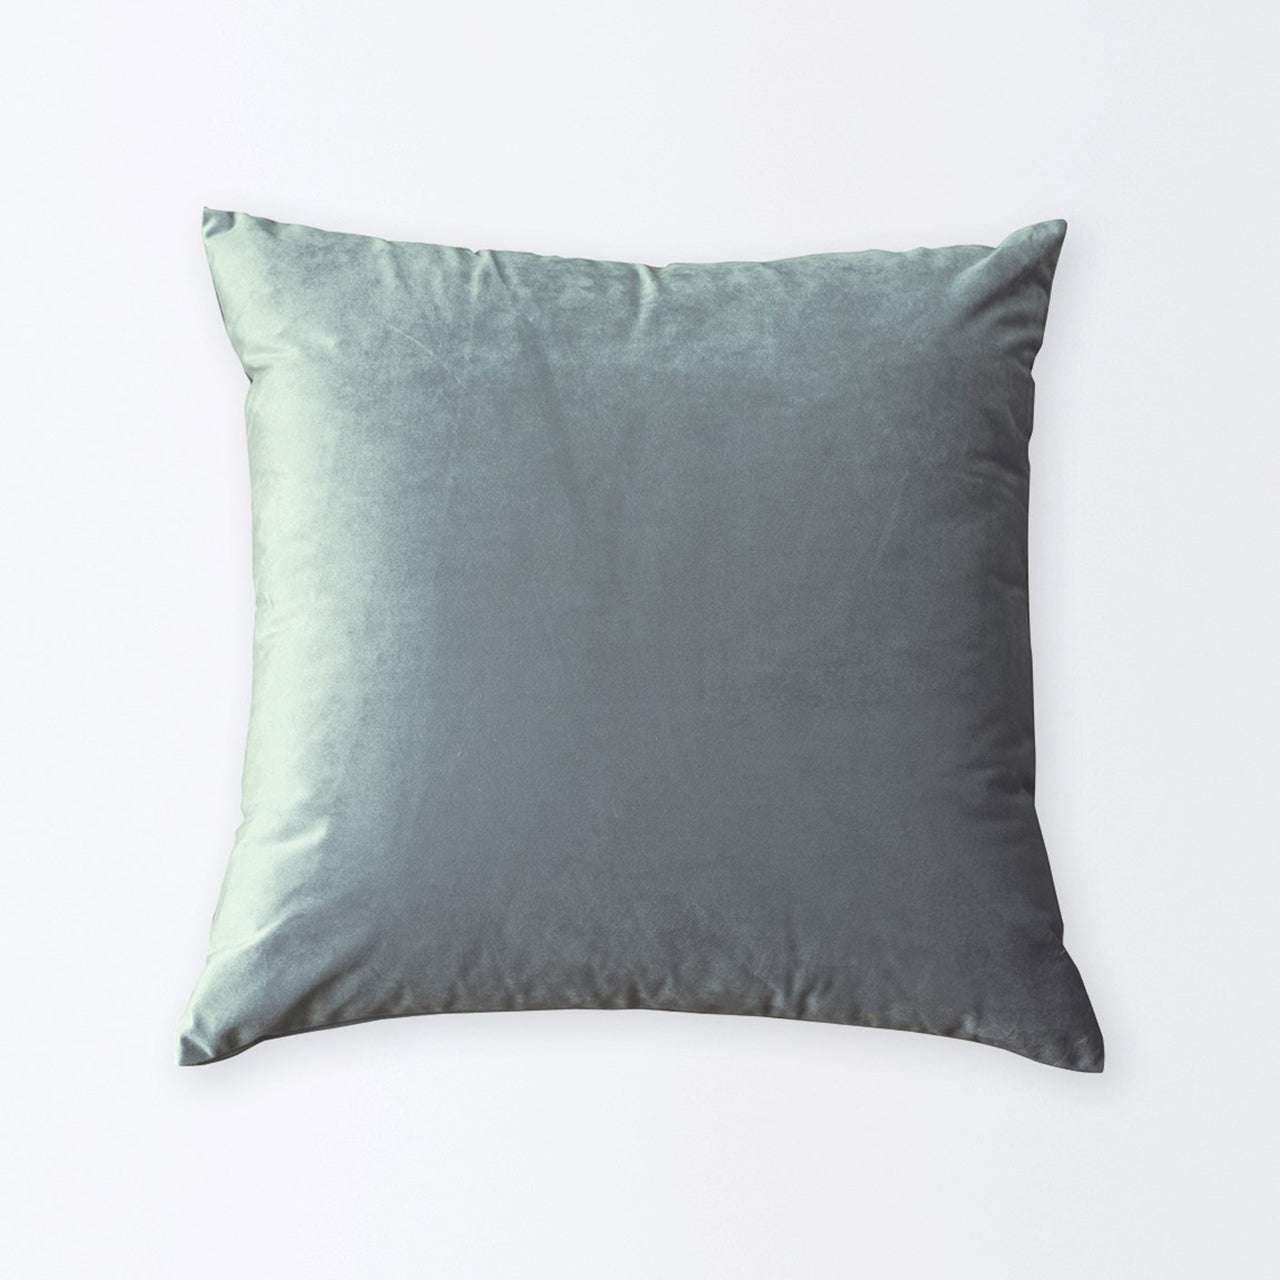 Velvet Cushion Cover Grey on a white background